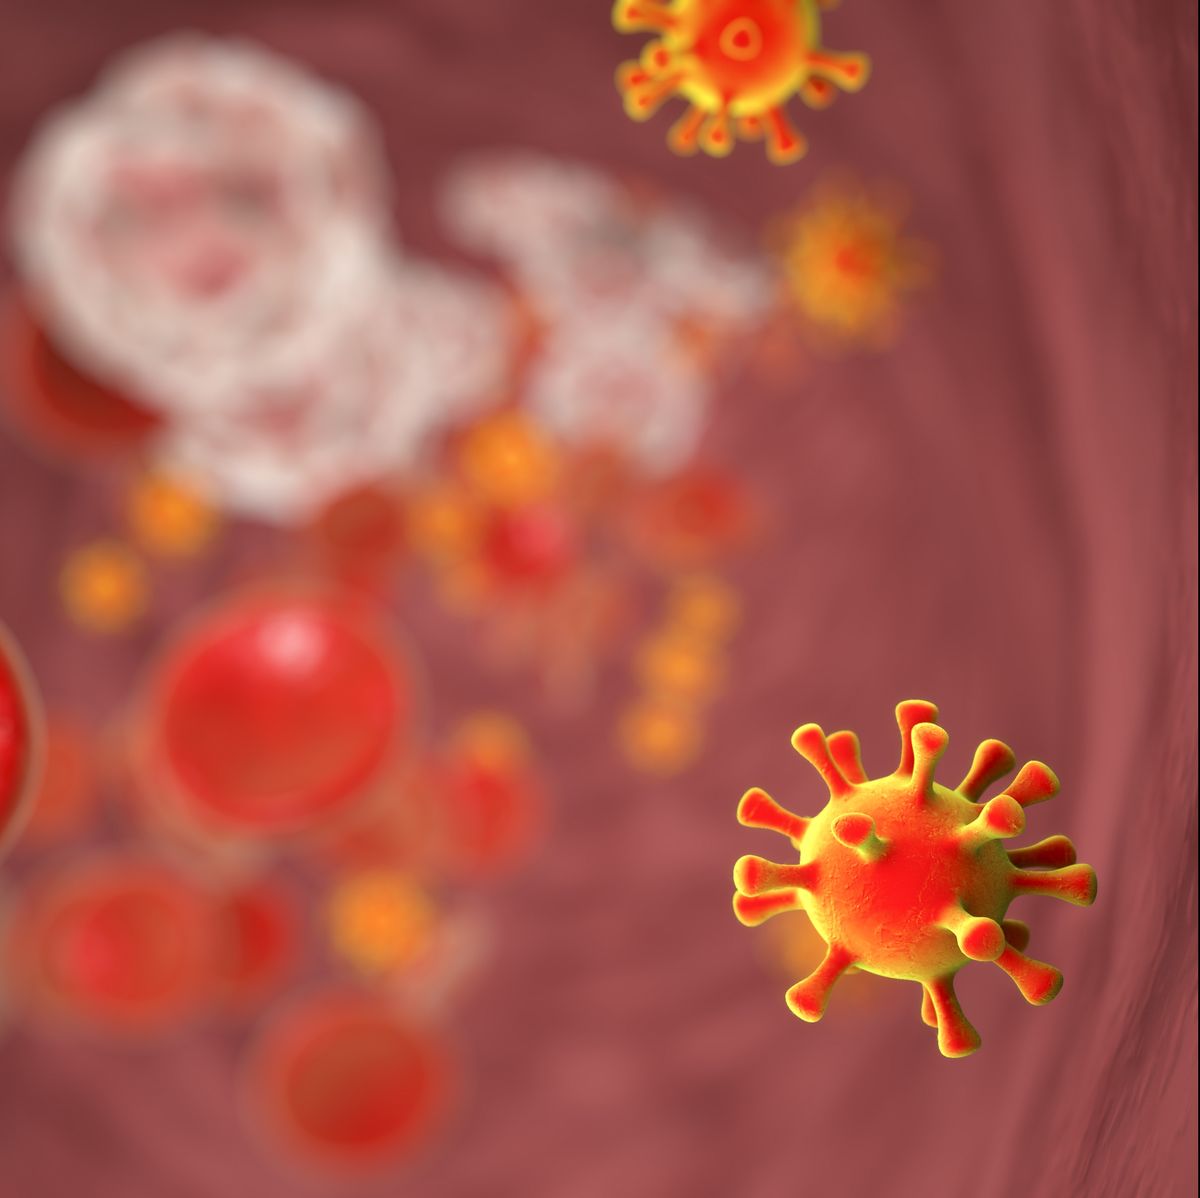 HIV in blood, illustration